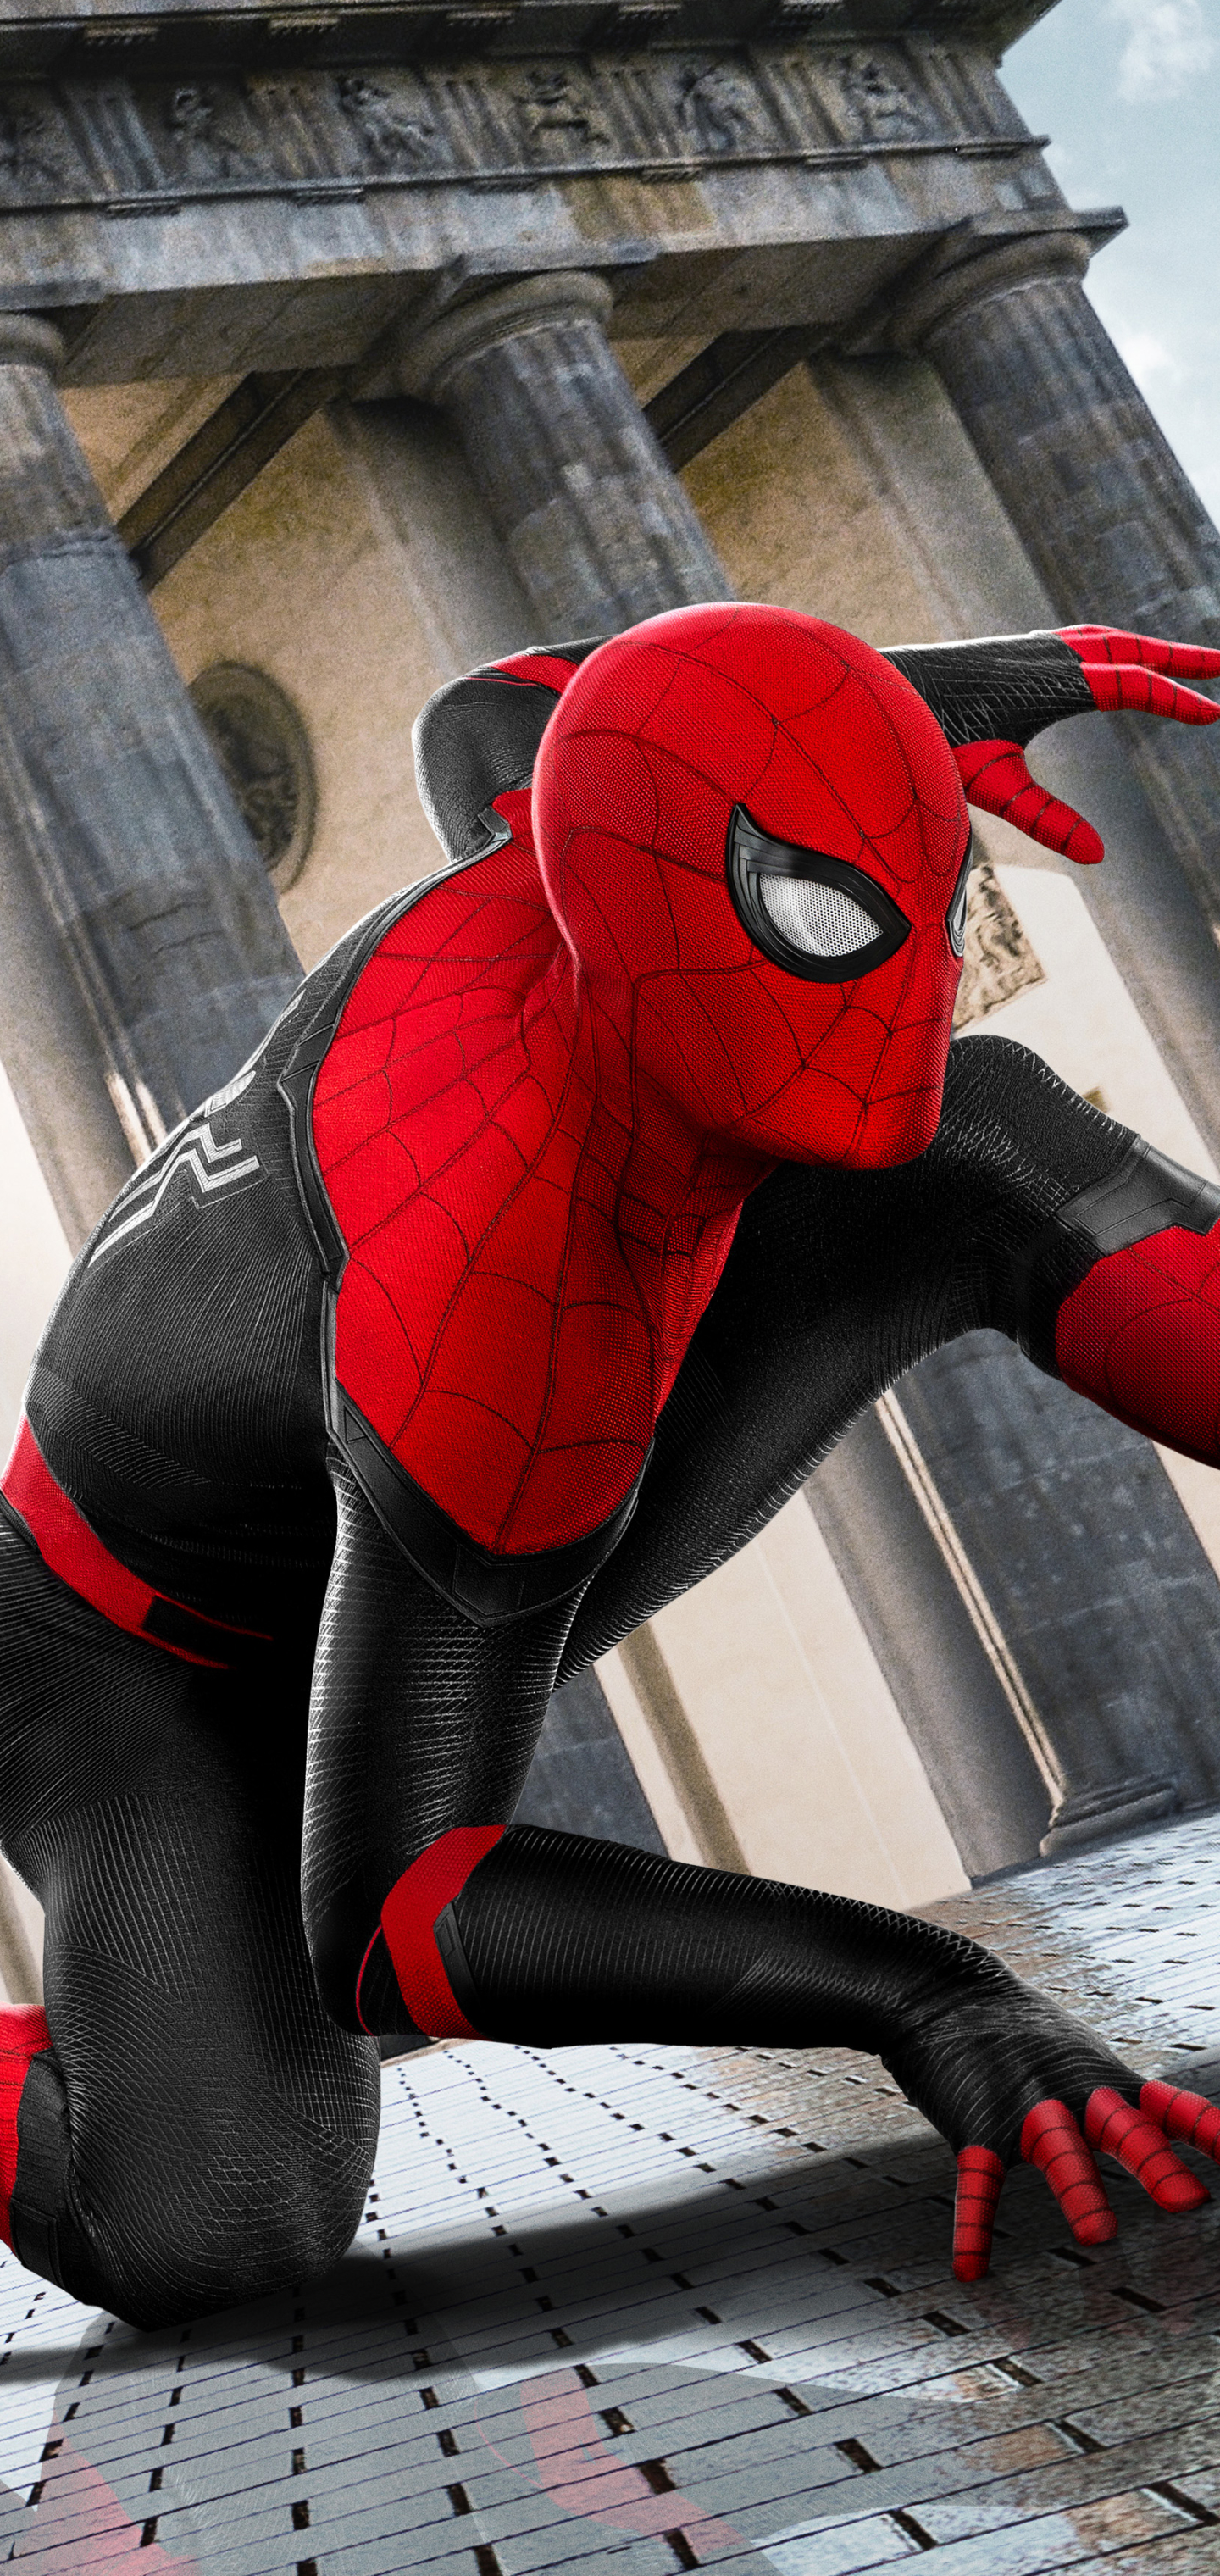  Spider Man: Far From Home Full HD Wallpaper